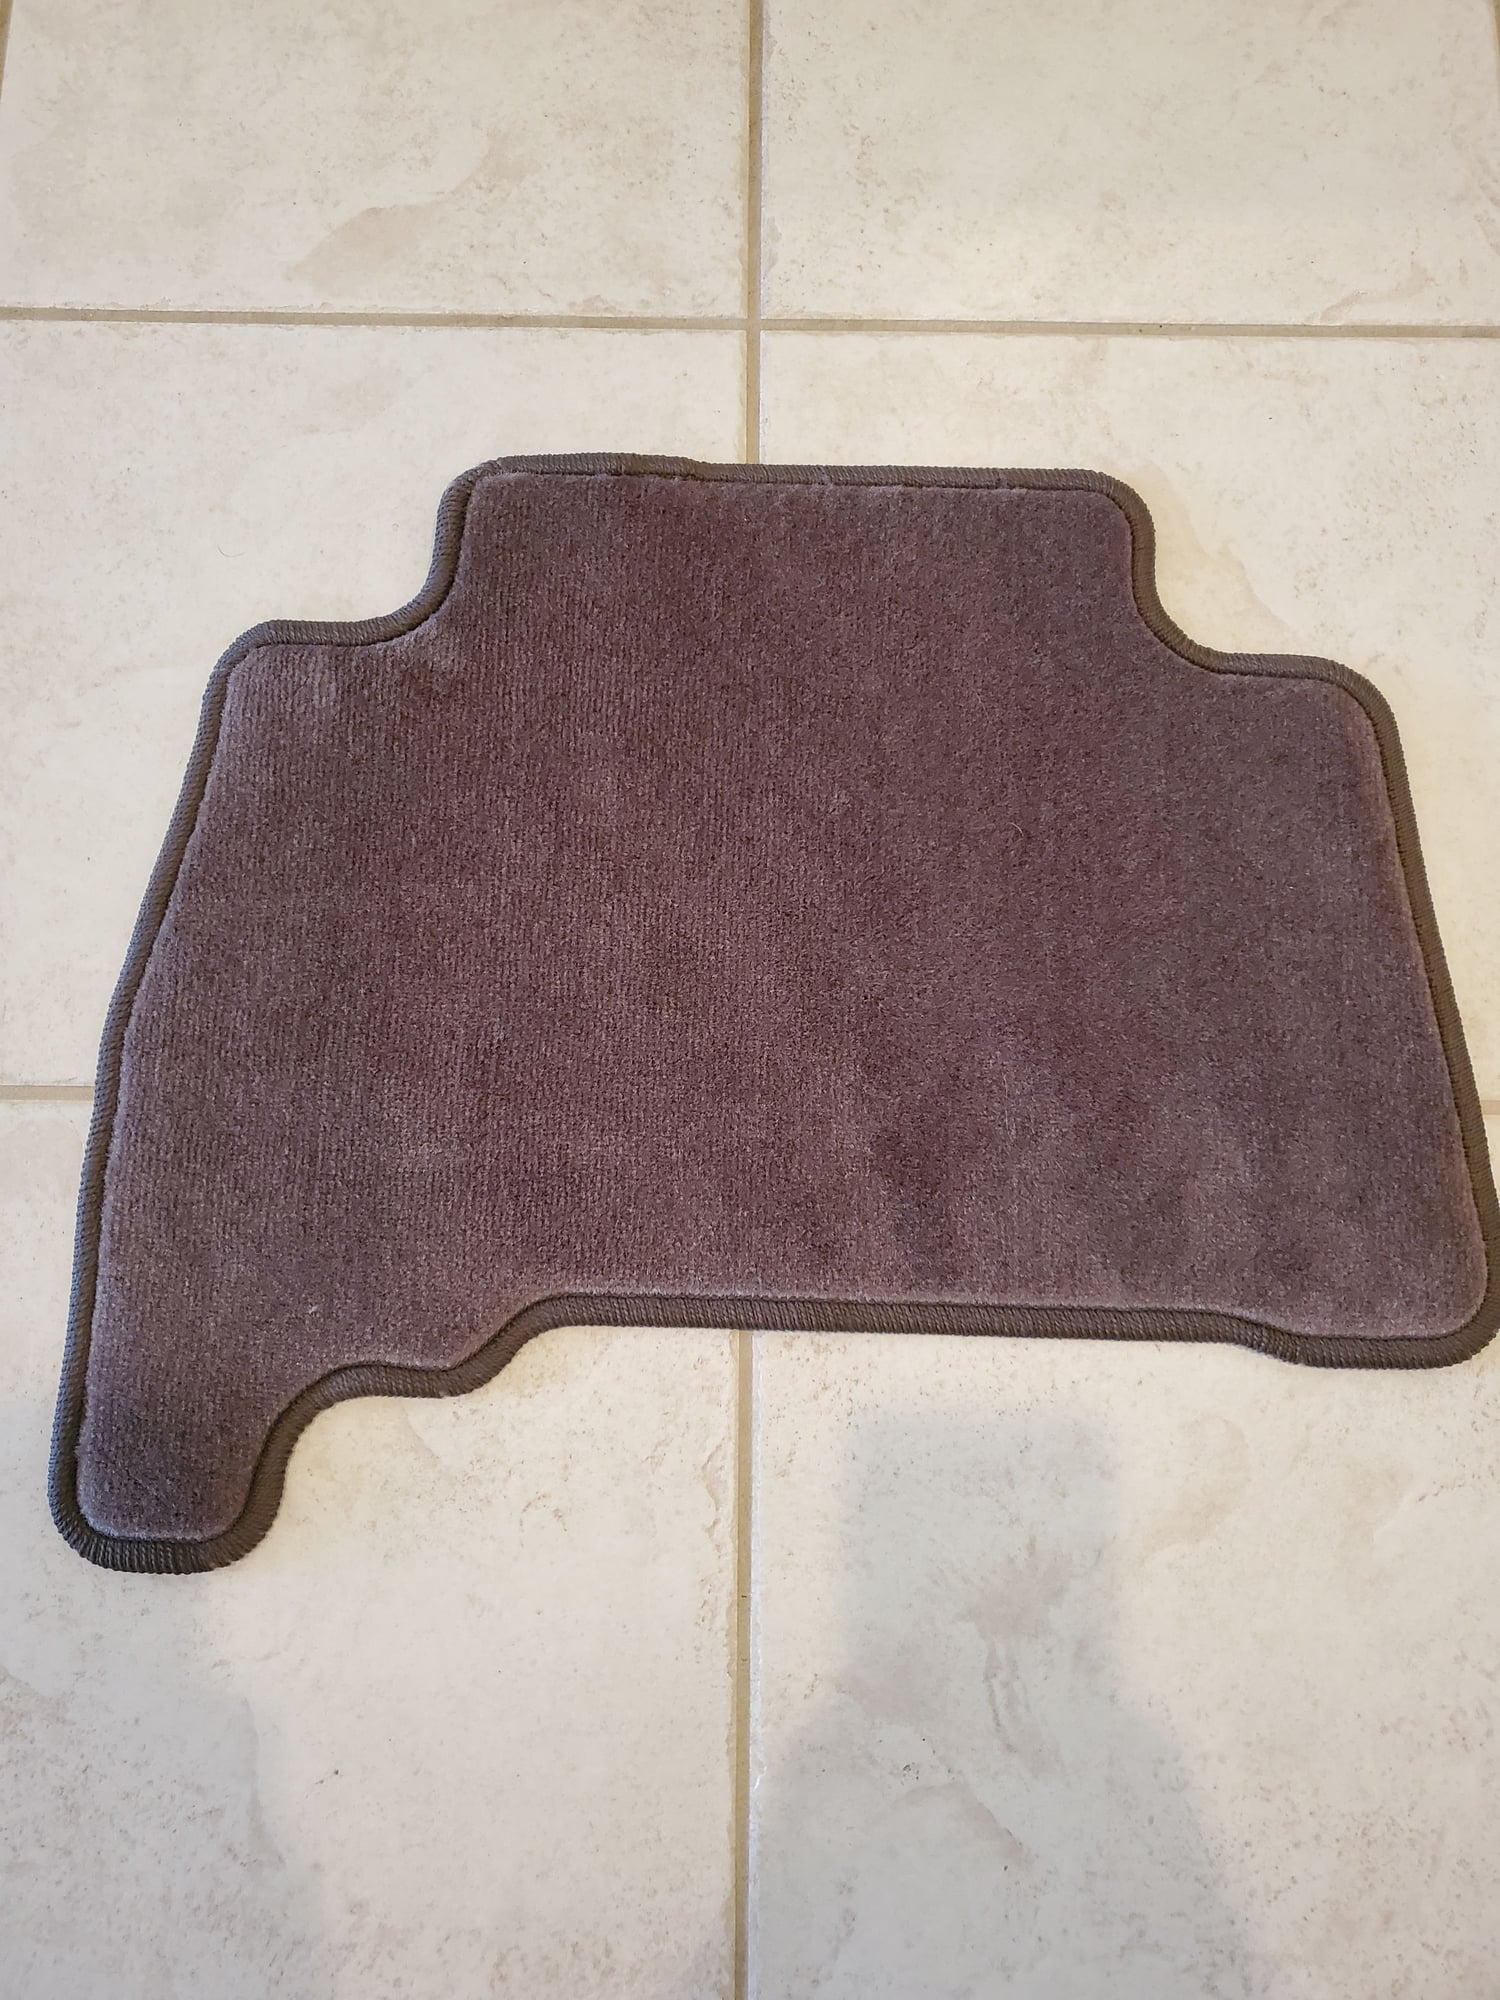 Interior/Upholstery - GX460 Floor Mats and Carpet Cargo Mat, New, Sepia interior color. - New - 2014 Lexus GX460 - Gold Canyon, AZ 85118, United States